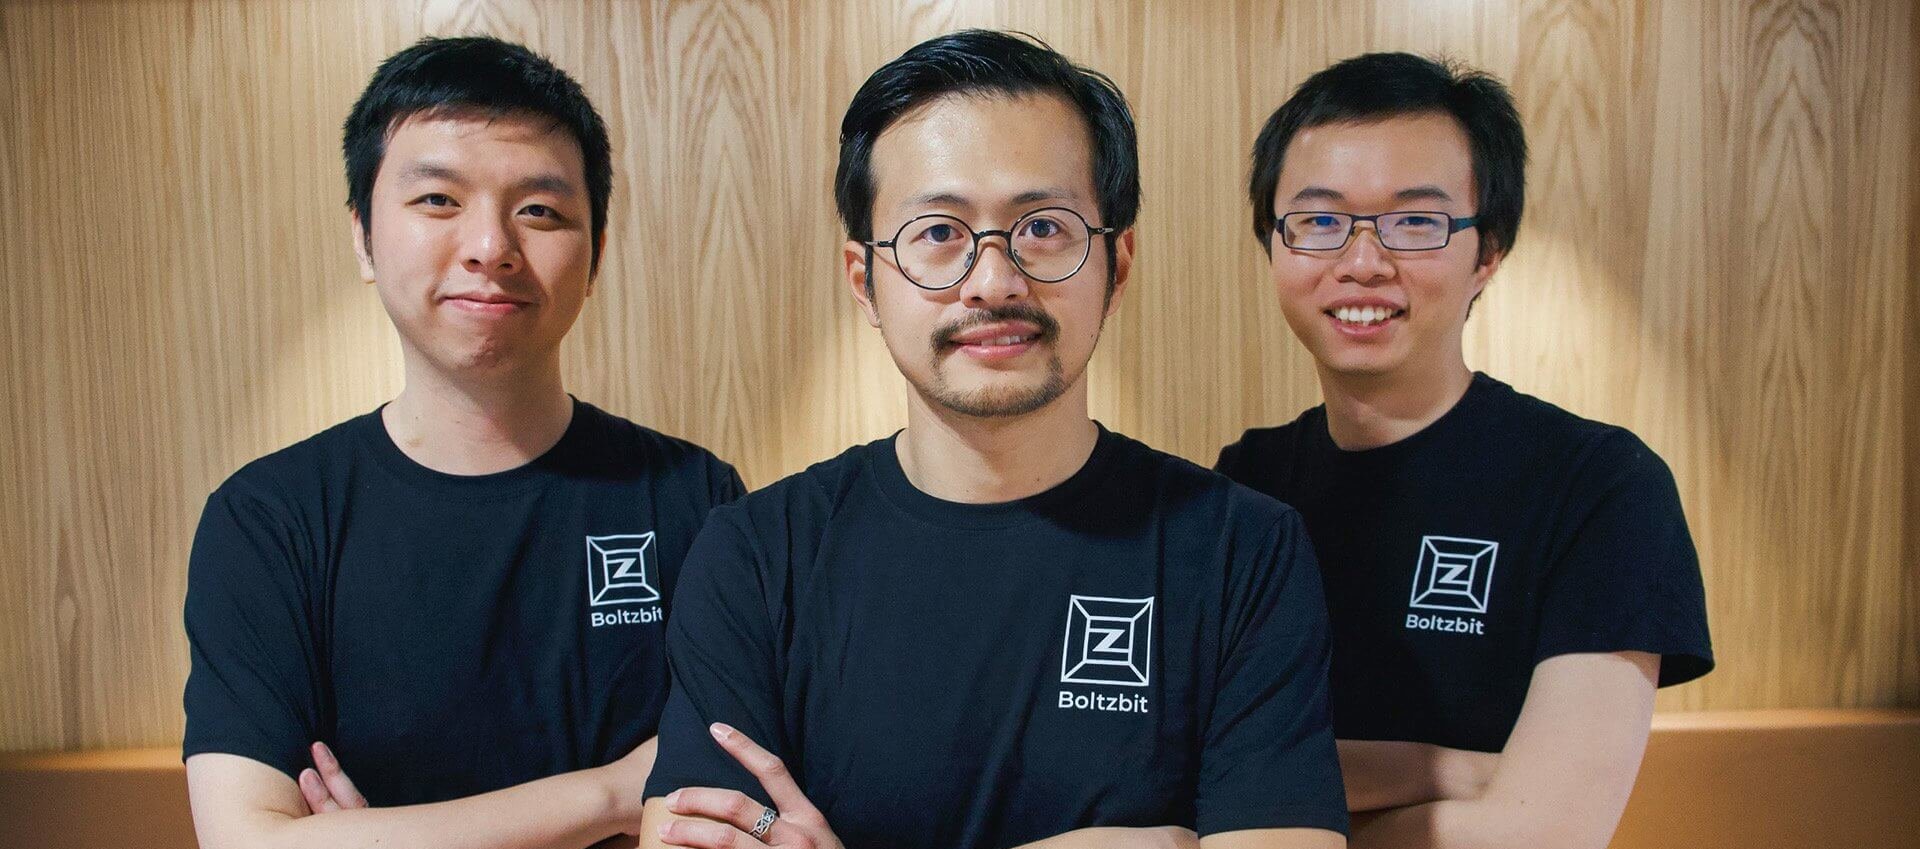 ‘Generative AI’ startup Boltzbit raises £1.6m